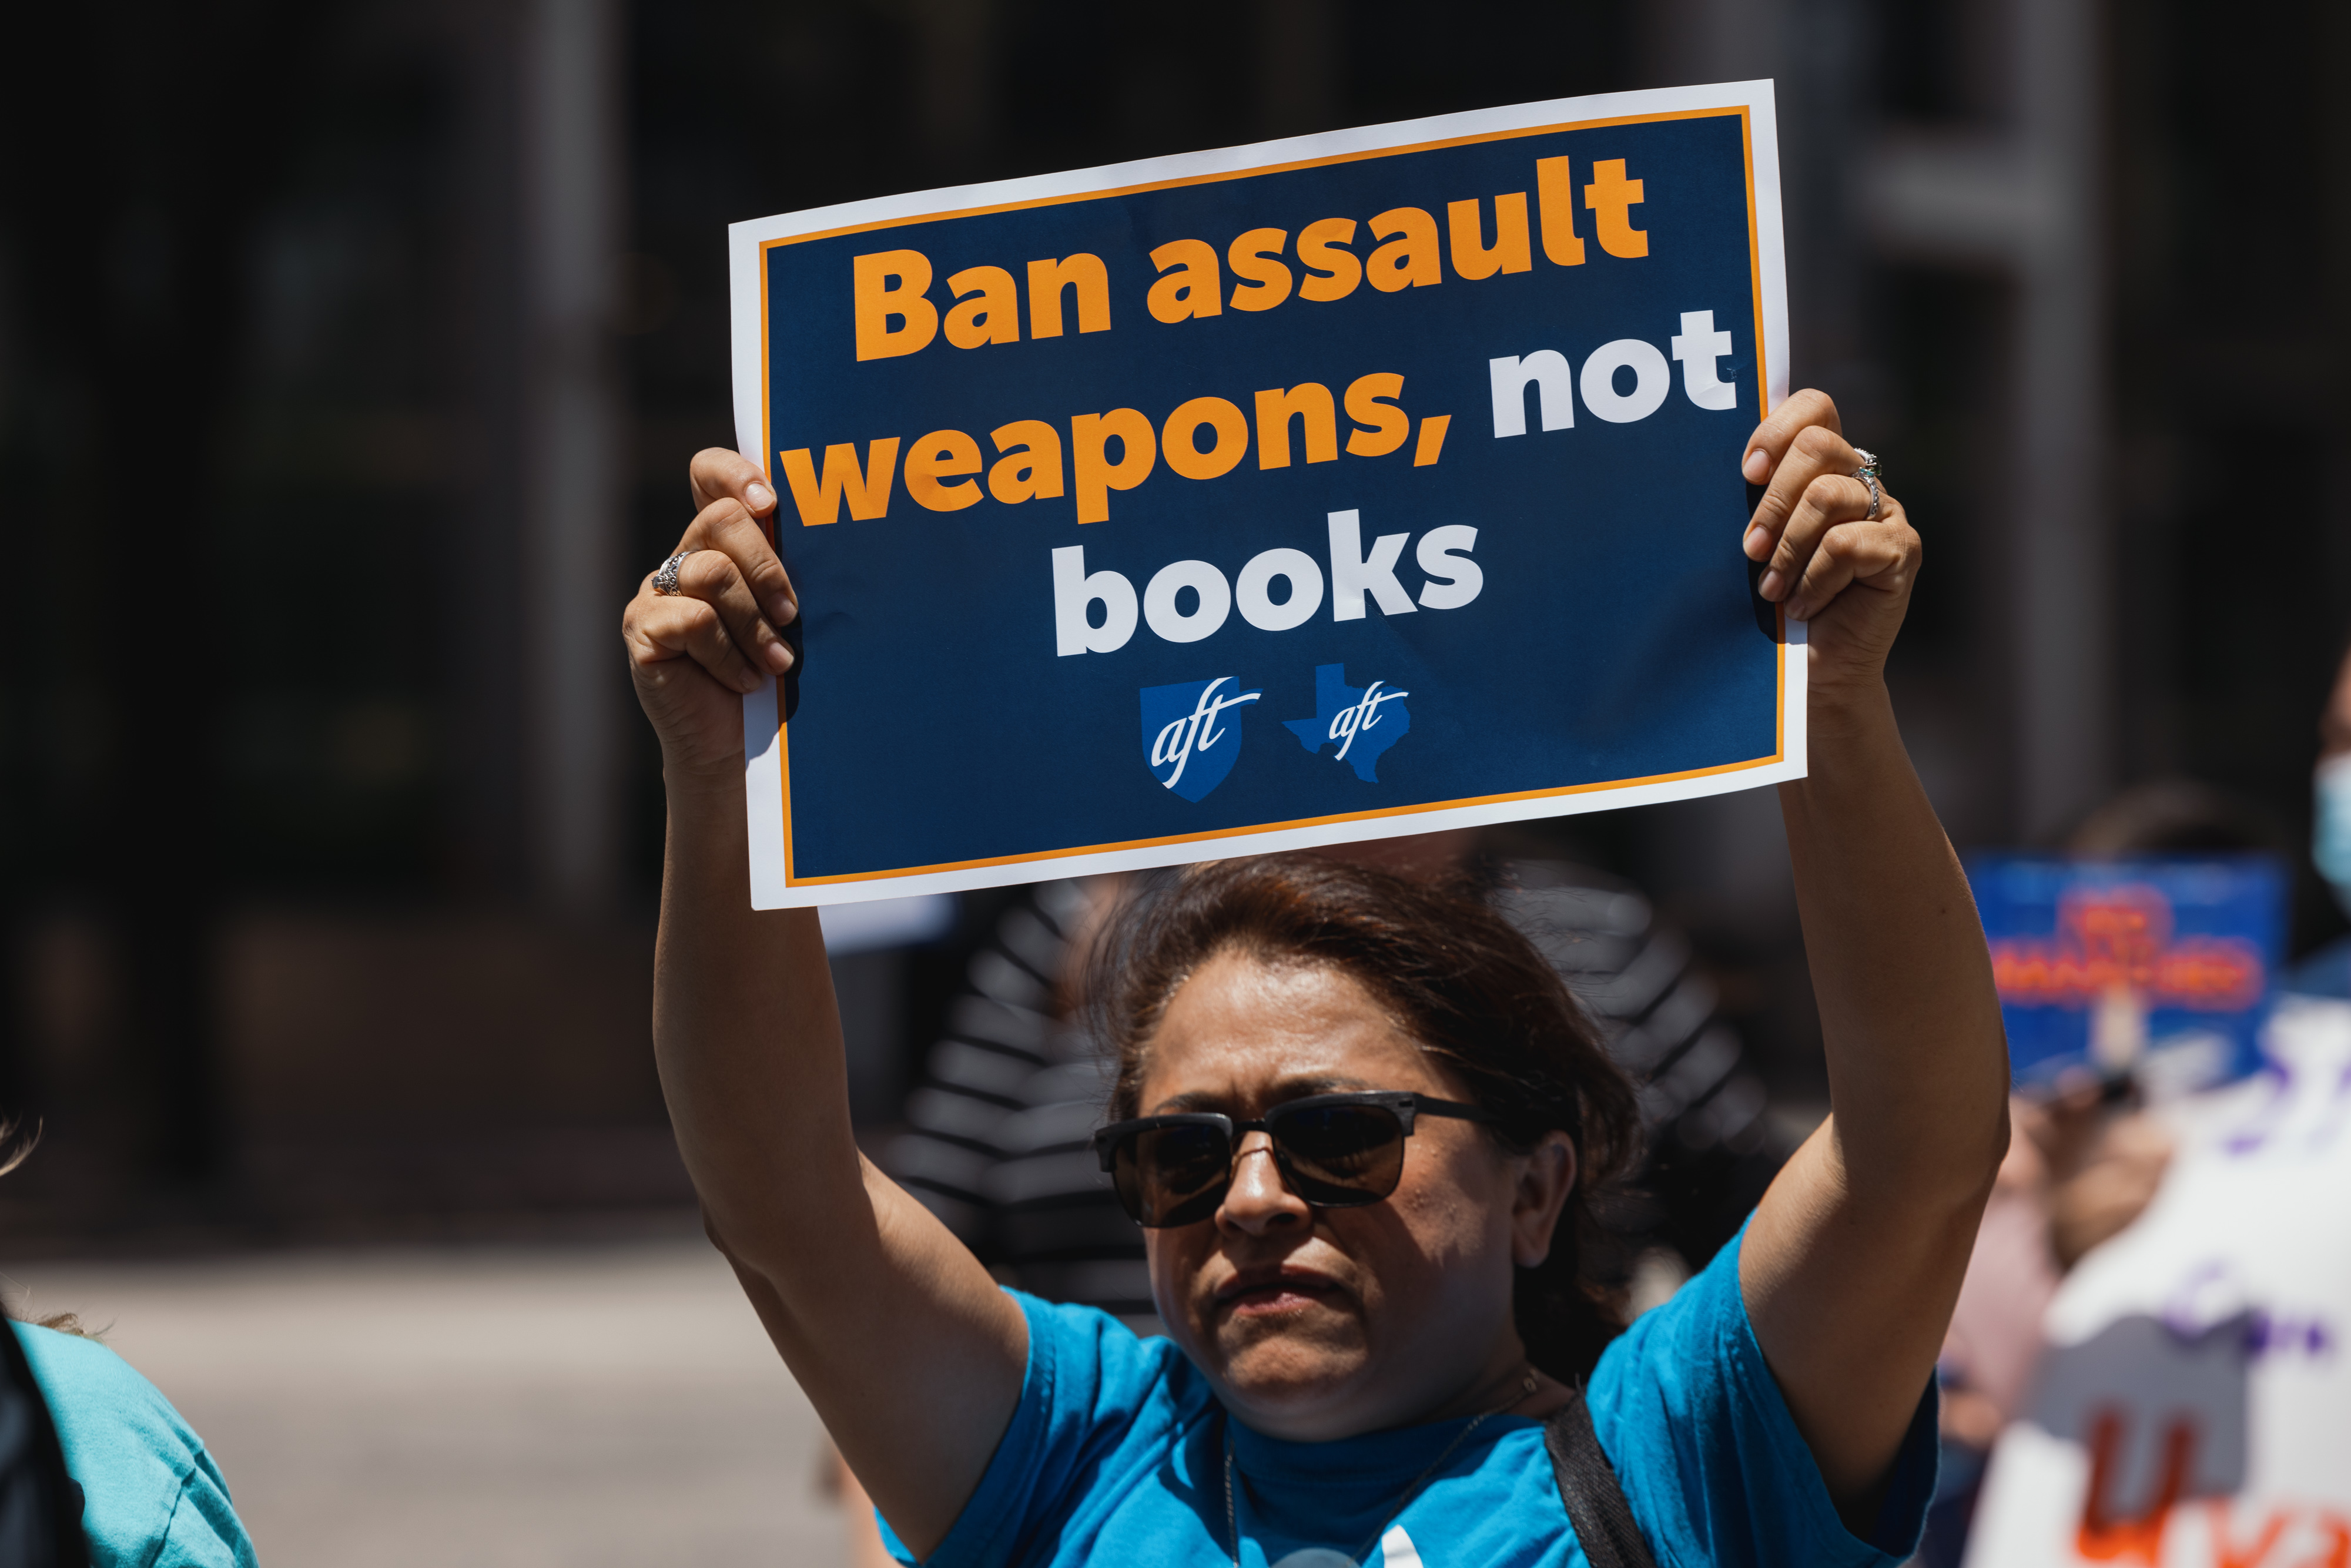 Teachers For Gun Legislation March Towards Senator Cruz’s Office